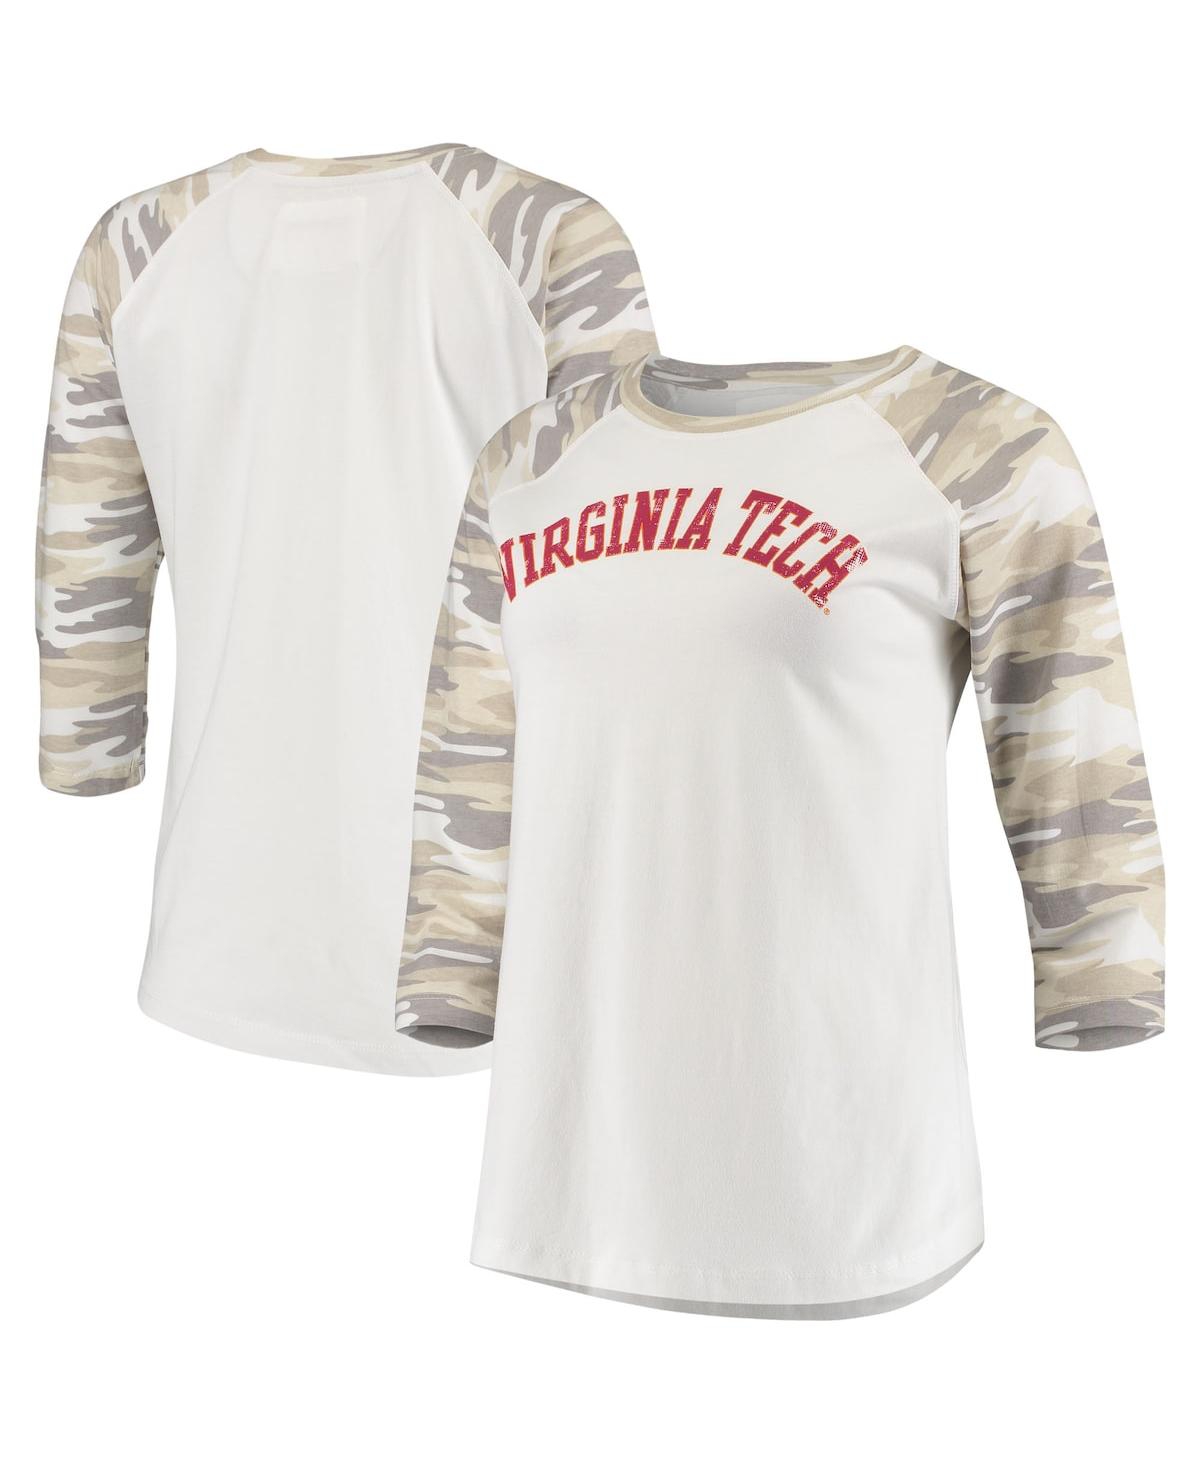 Women's White and Camo Virginia Tech Hokies Boyfriend Baseball Raglan 3/4 Sleeve T-shirt - White, Camo